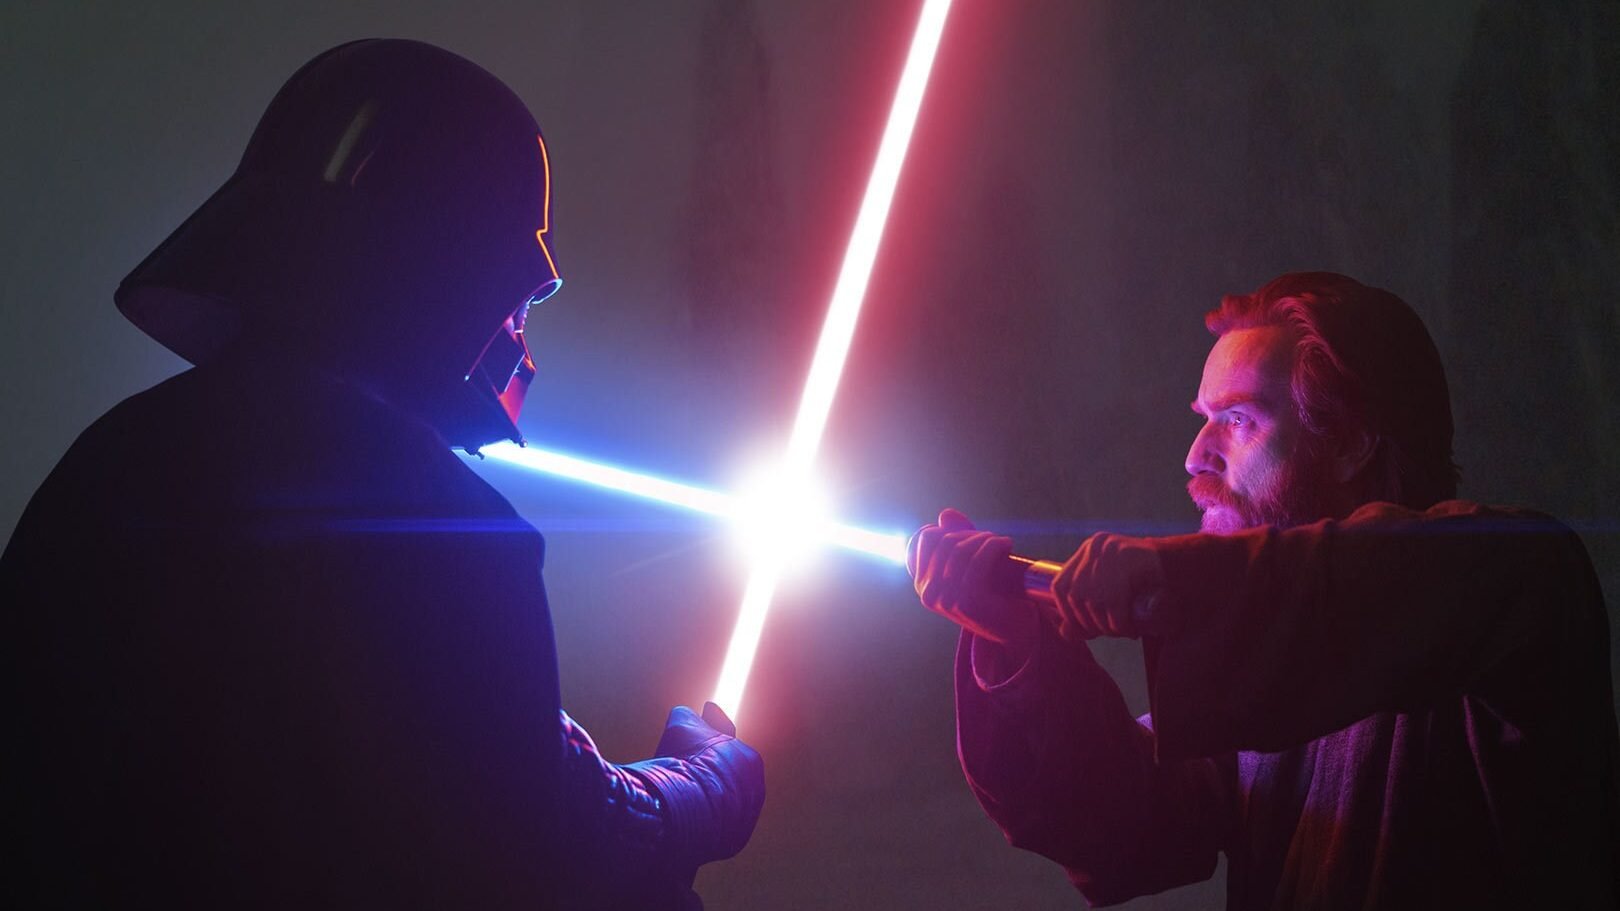 How 'Obi-Wan Kenobi' Found Balance Between the Trilogies